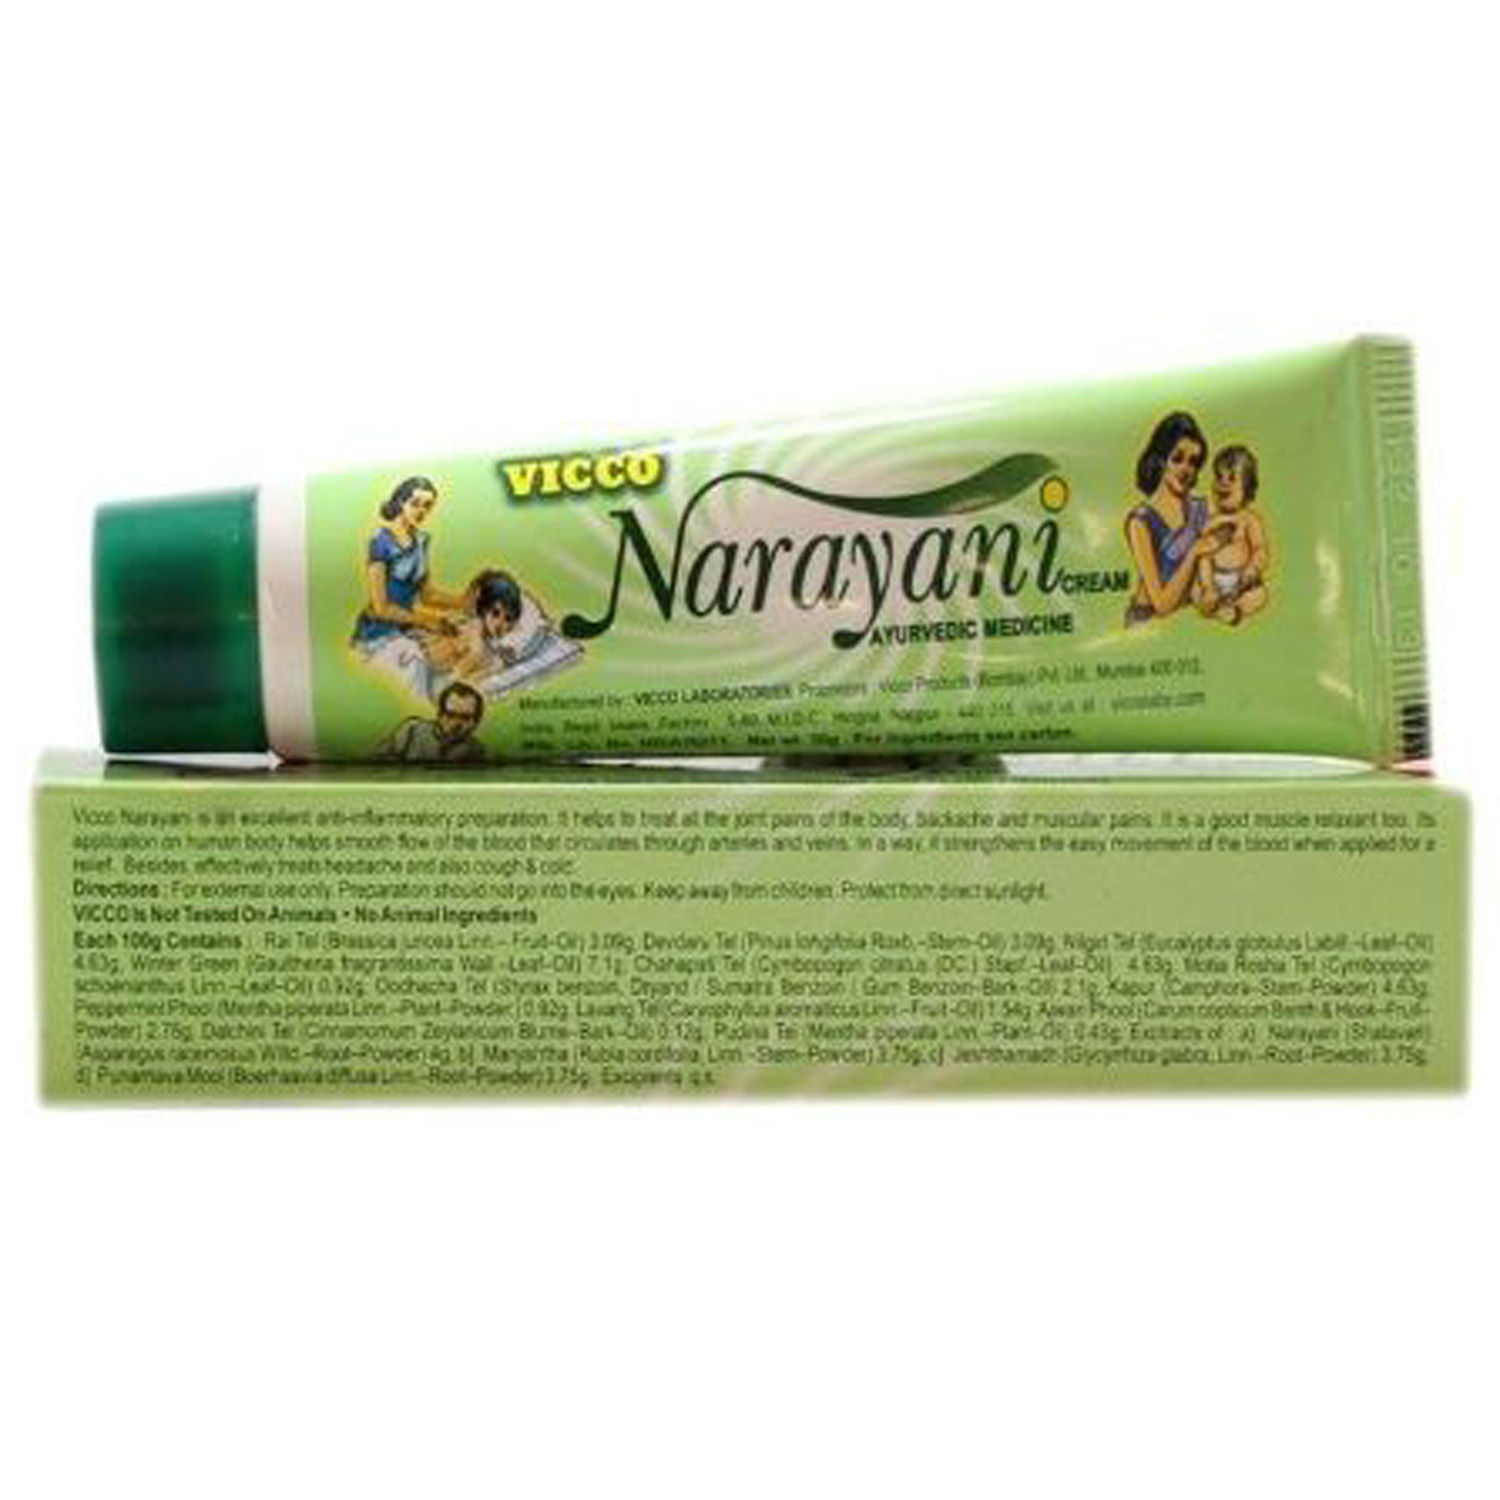 Buy Vicco Narayani Cream, 15 gm Online